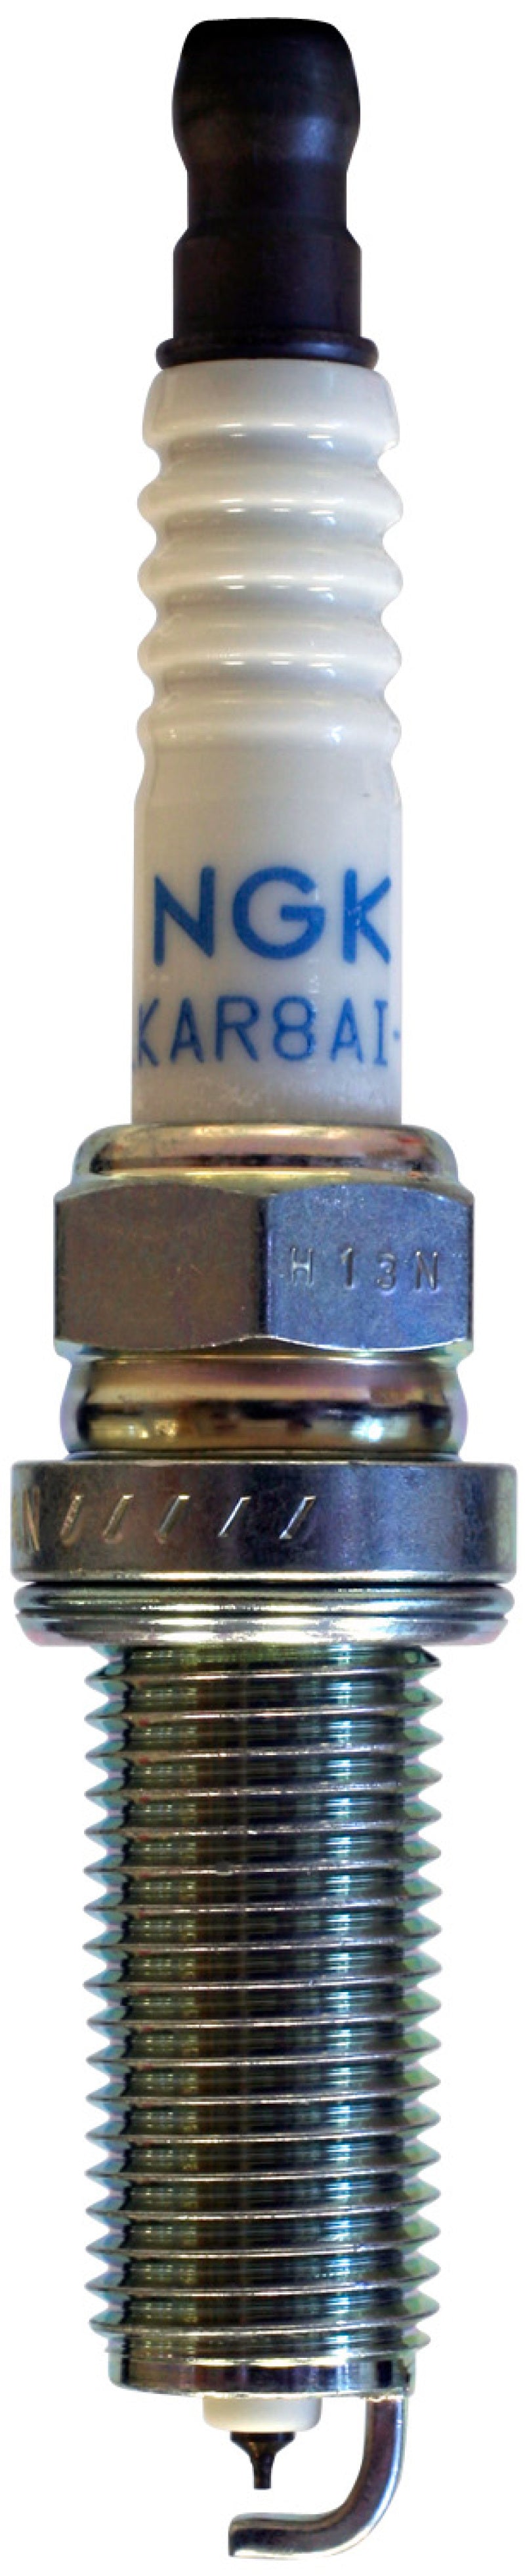 NGK Iridium/Platinum Spark Plug Box of 4 (LKAR8AI-9) -  Shop now at Performance Car Parts